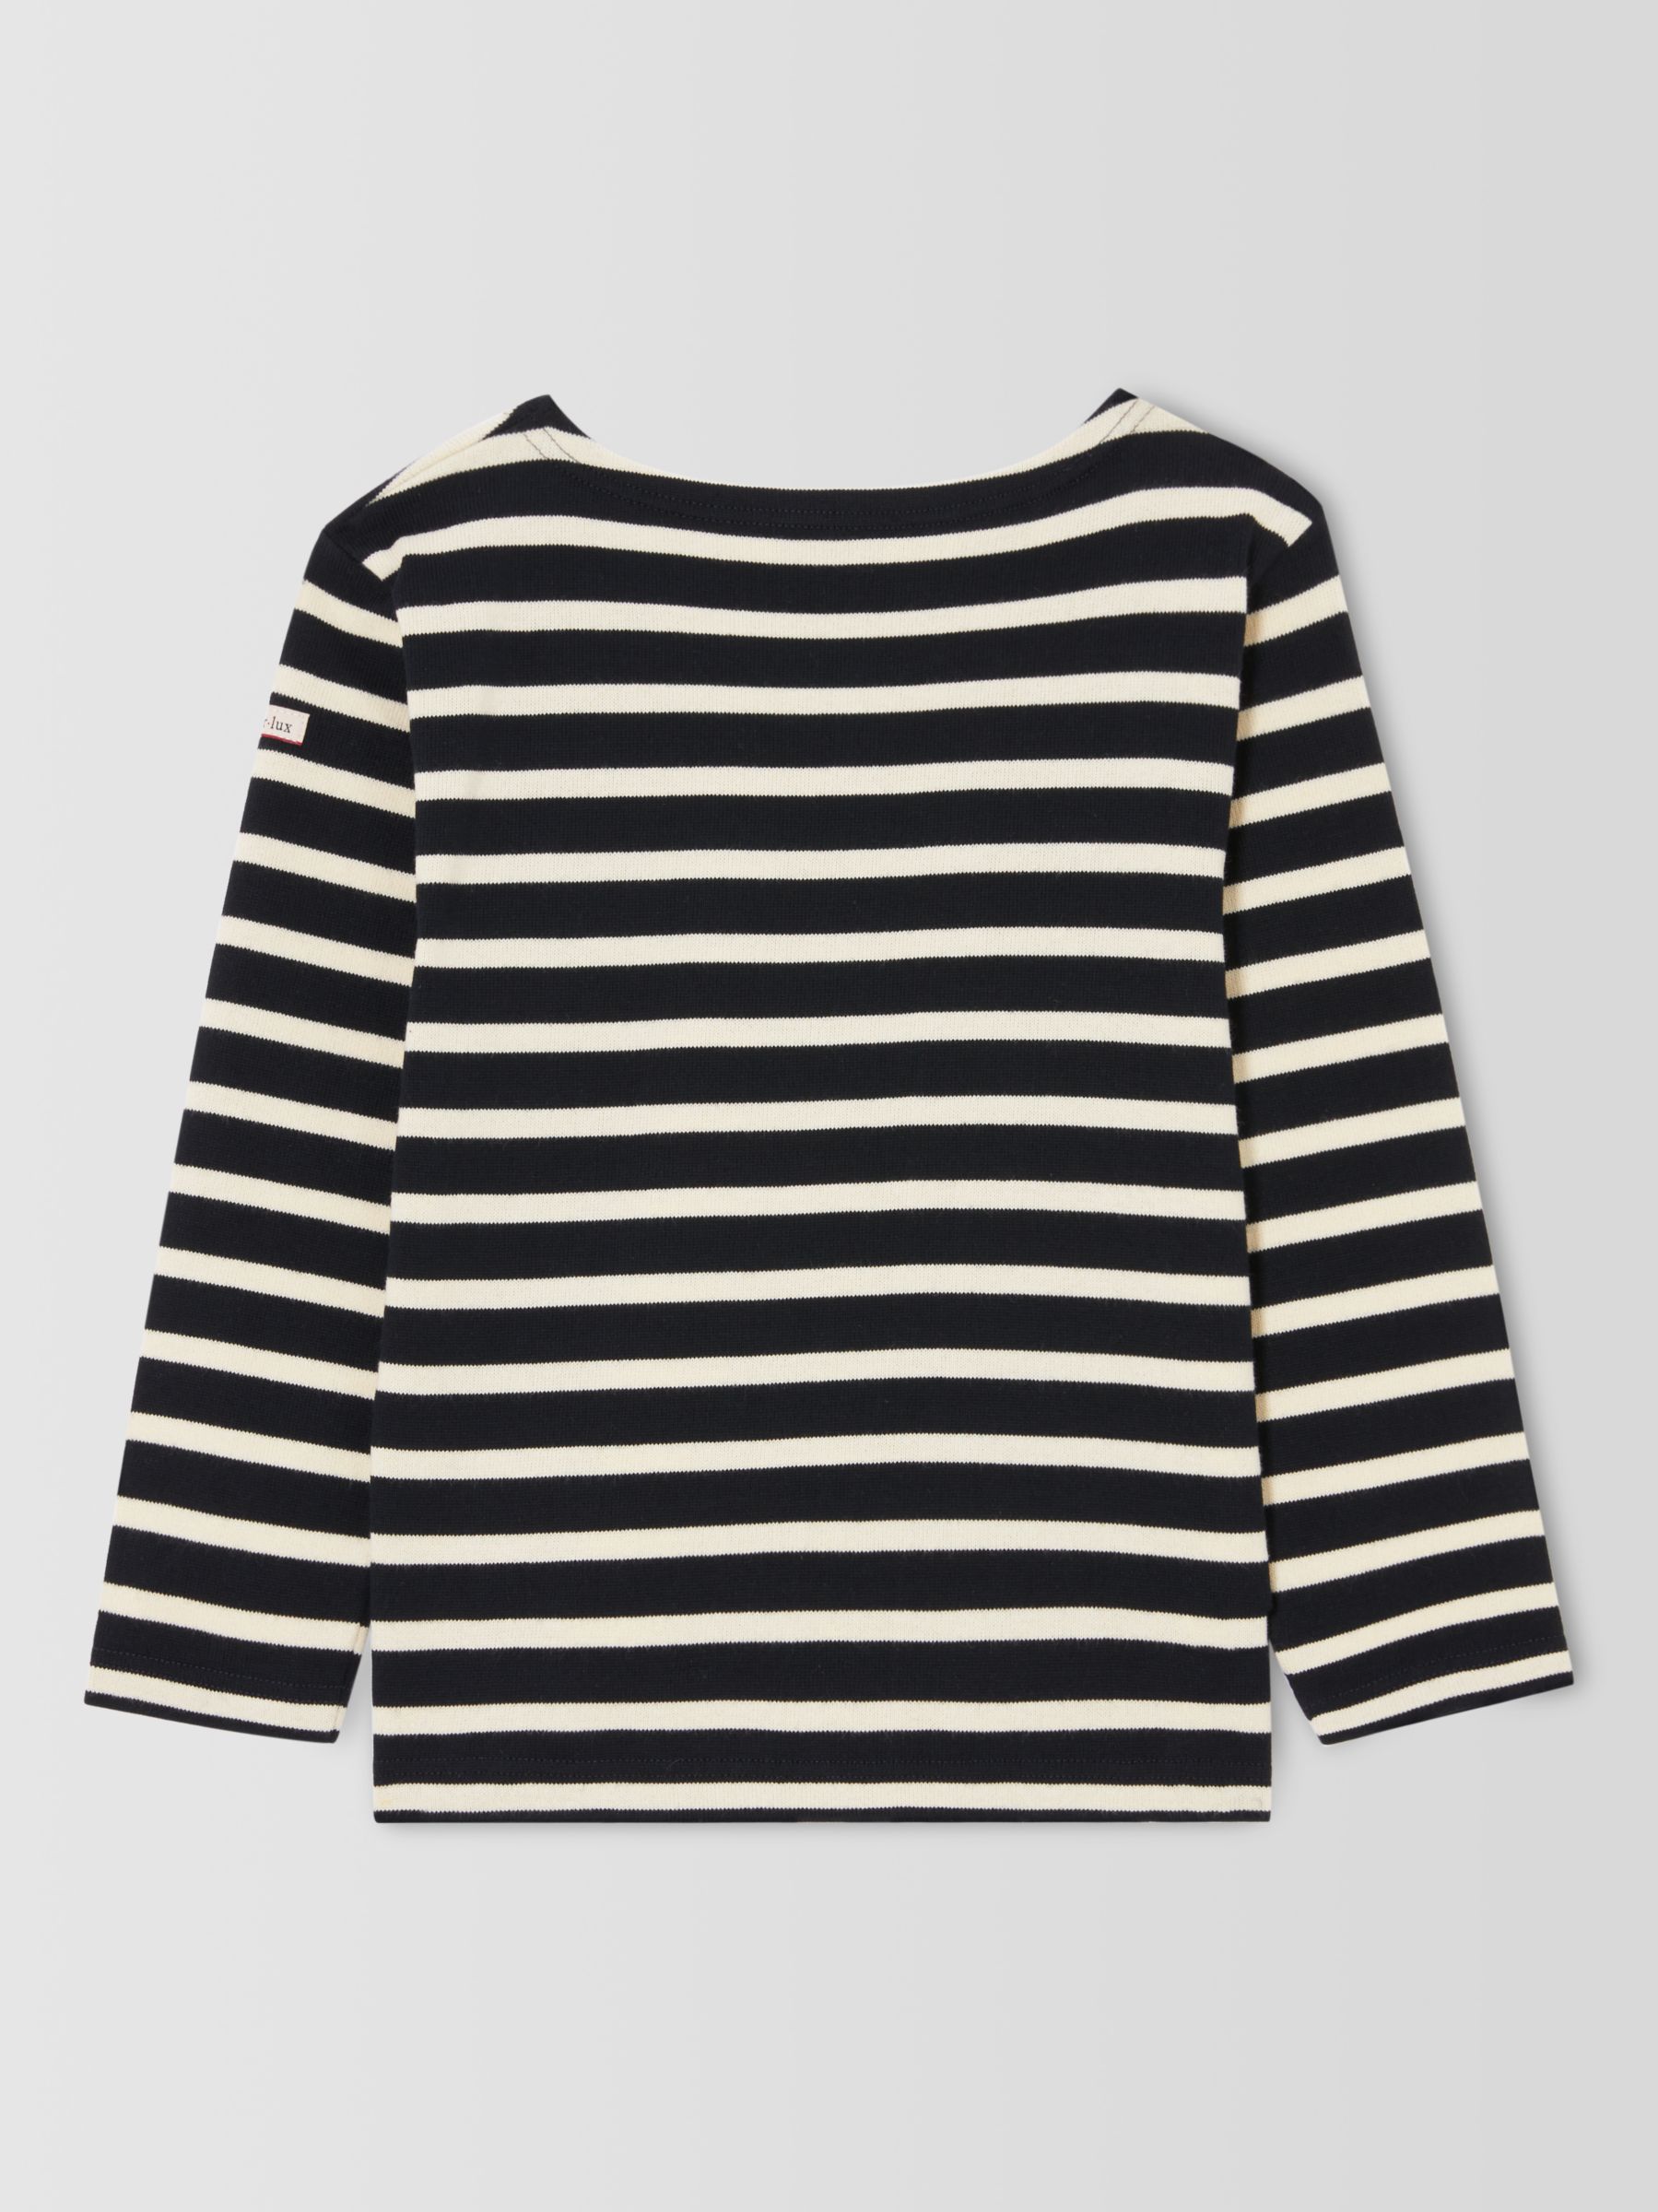 Armor Lux Breton Stripe Long Sleeve T-Shirt, Navy/Cream, 8 years